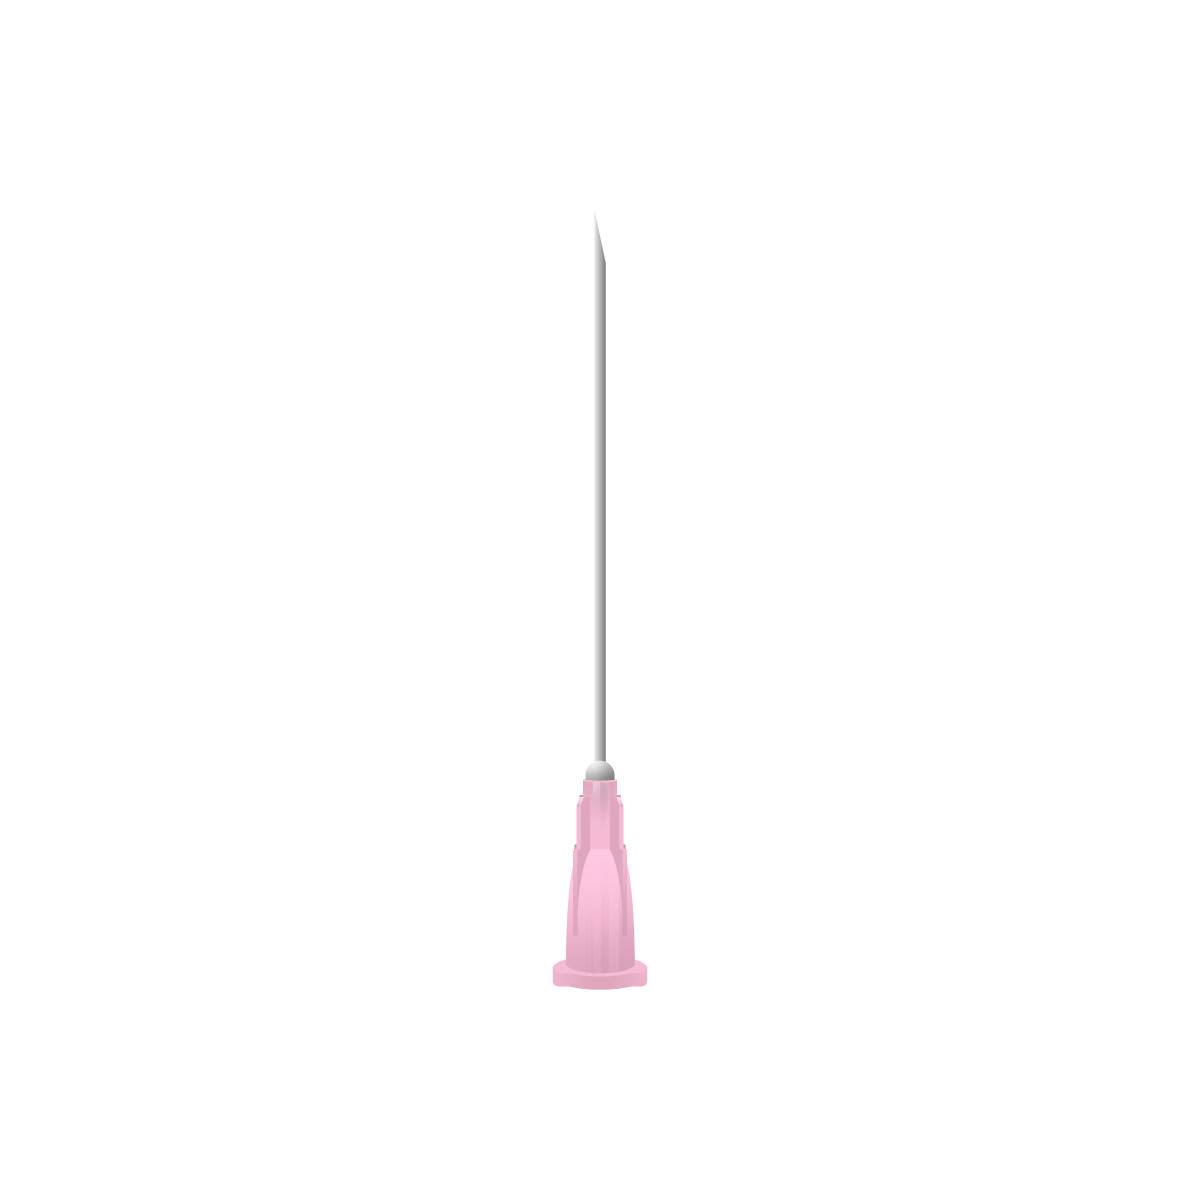 18g Pink 2 inch BD Microlance Needles - UKMEDI